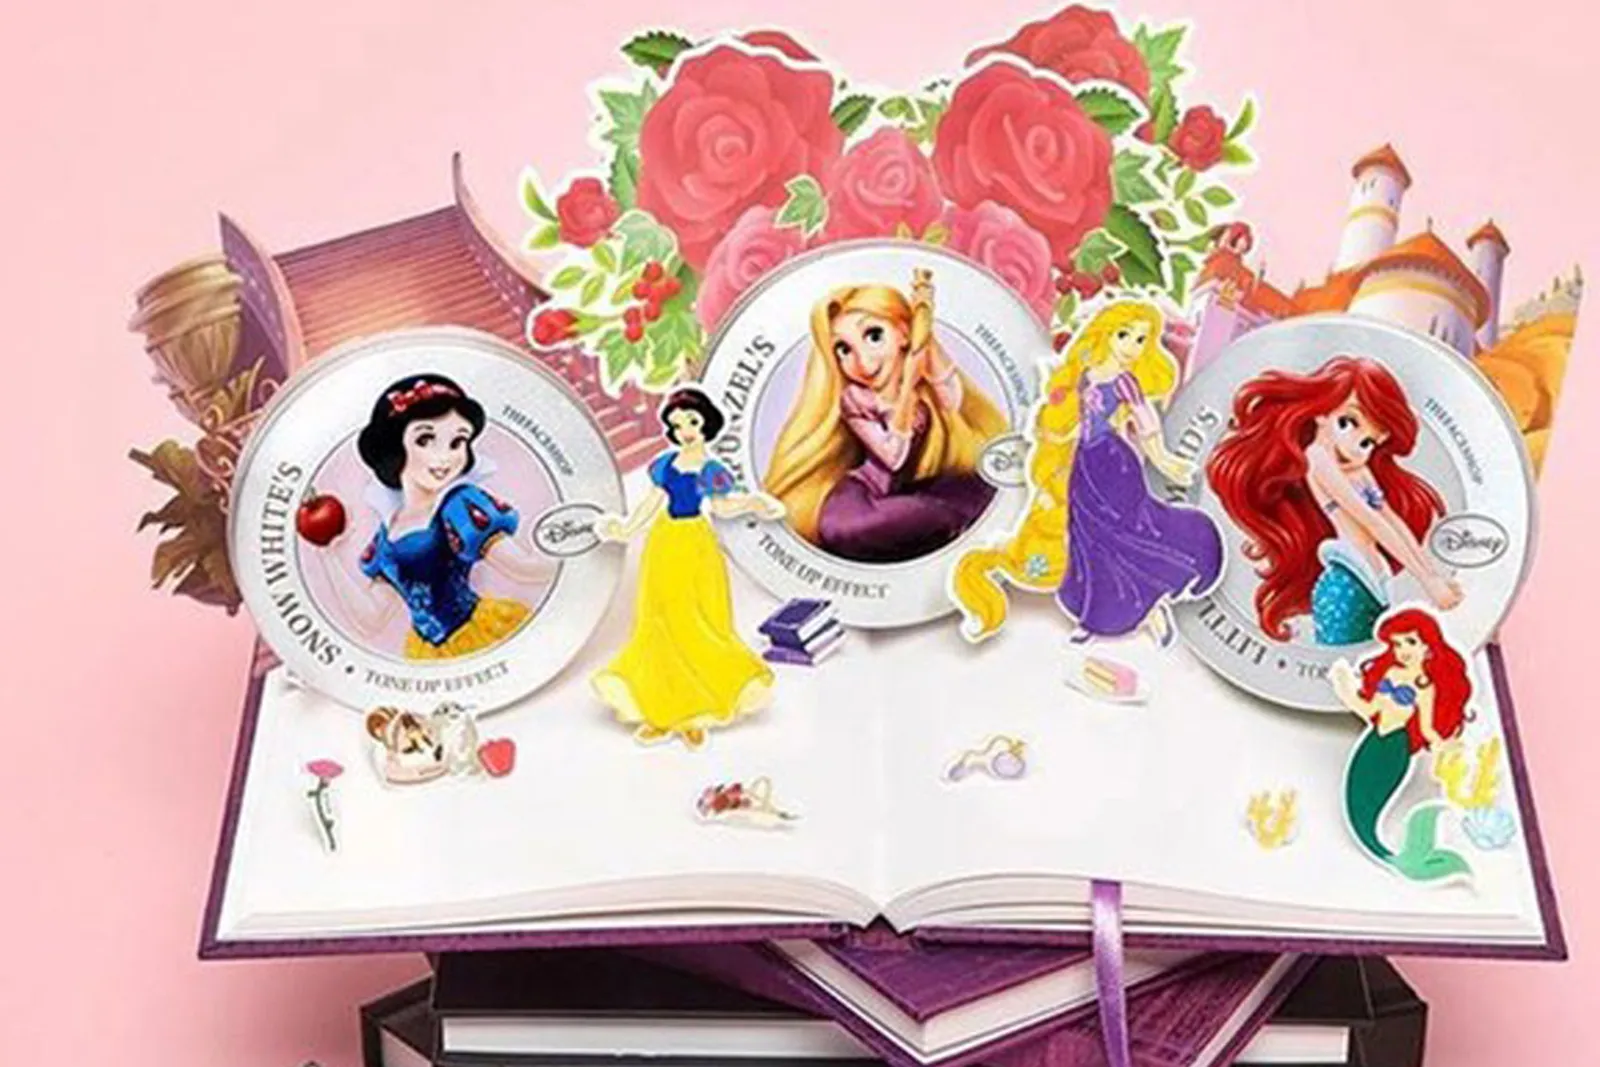 Gemas! Merek Kosmetik Korea Hadirkan Kolaborasi Lucu dengan Karakter Disney